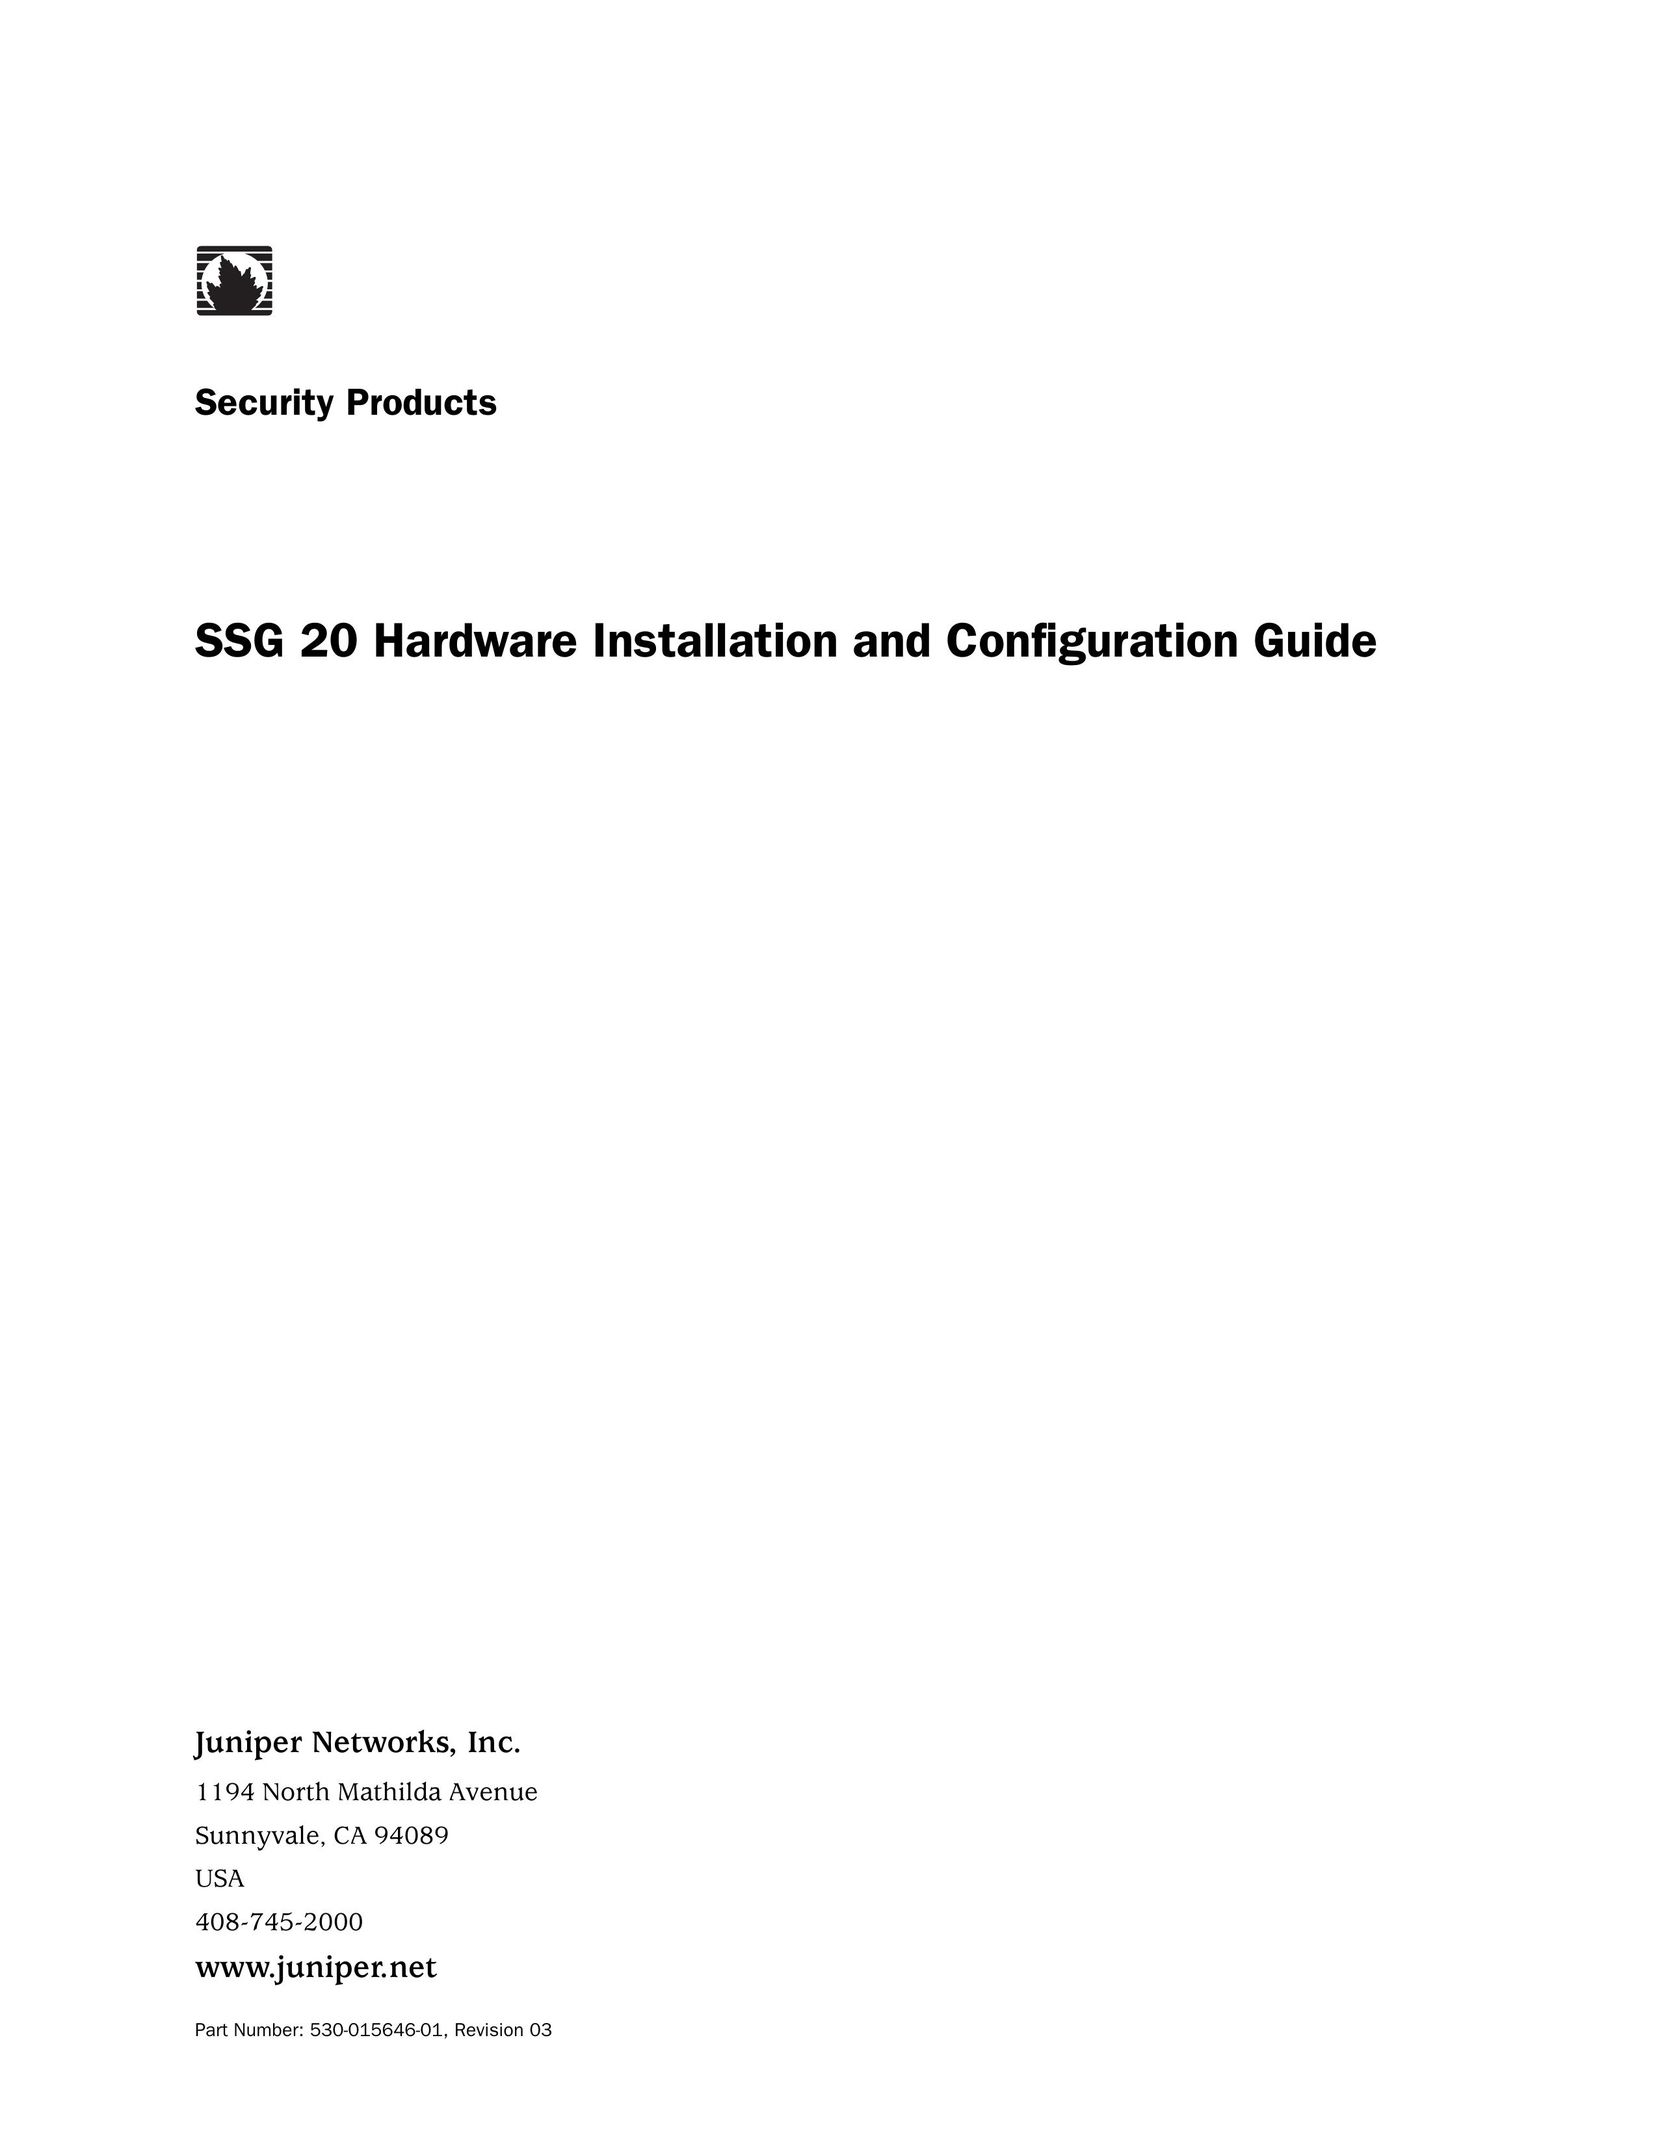 Juniper Networks SSG 20 Computer Hardware User Manual